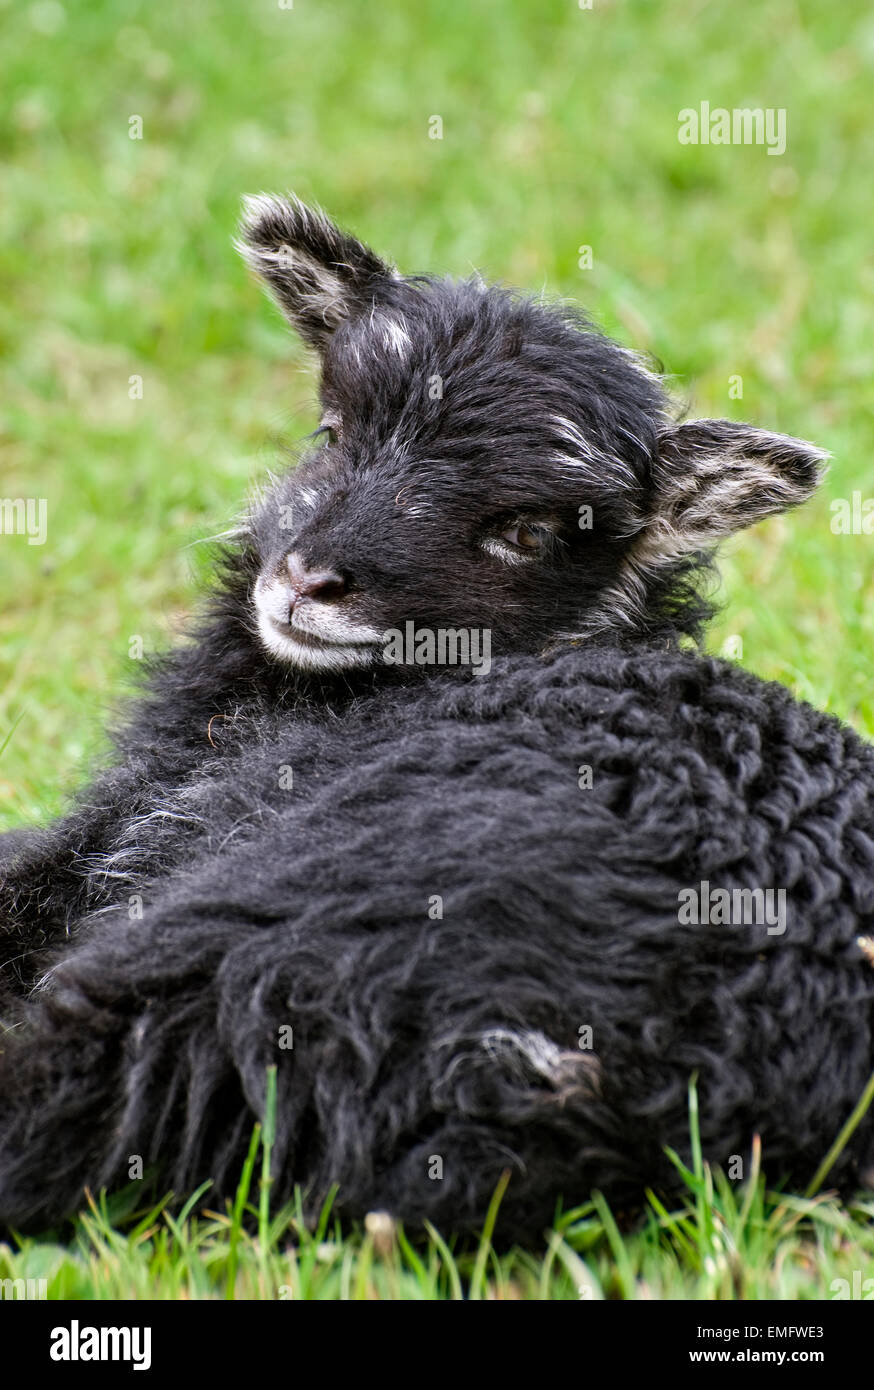 A black North Ronaldsay lamb. North Ronaldsay's are on the rare breeds list. Stock Photo